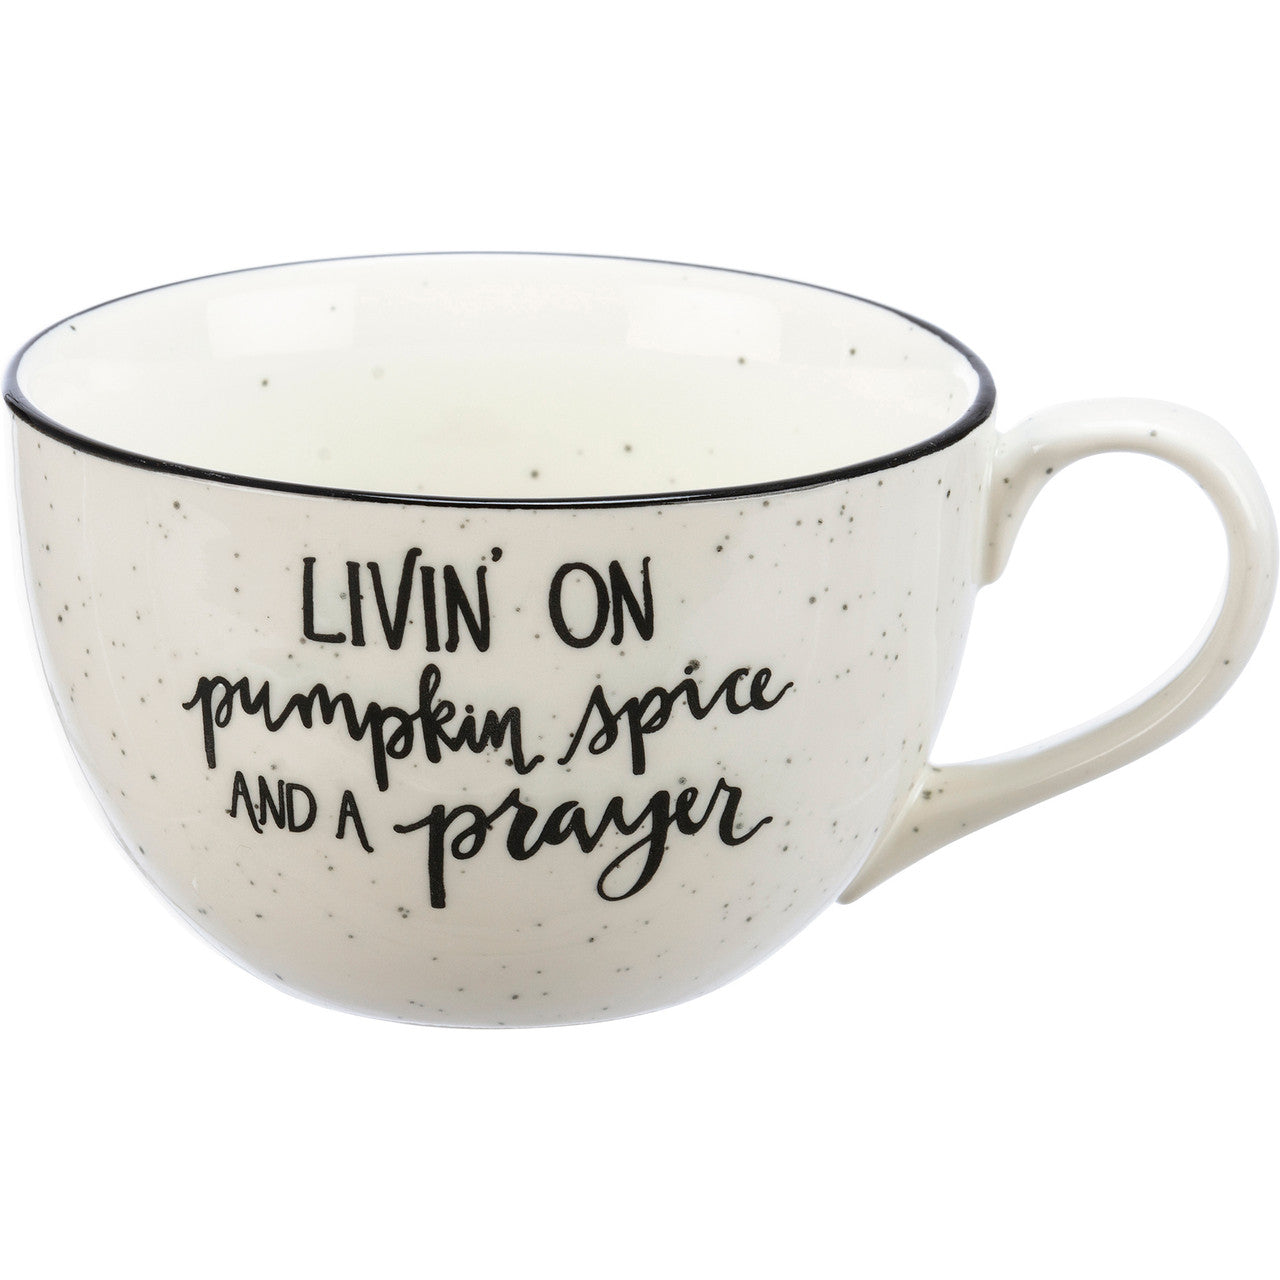 Primitives by Kathy "Livin On Pumpkin Spice and a Prayer" mug set